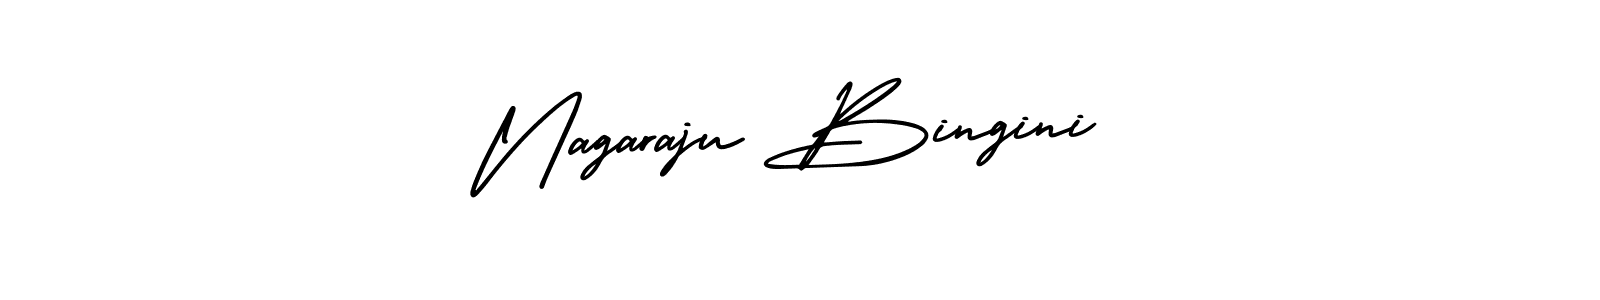 Use a signature maker to create a handwritten signature online. With this signature software, you can design (AmerikaSignatureDemo-Regular) your own signature for name Nagaraju Bingini. Nagaraju Bingini signature style 3 images and pictures png